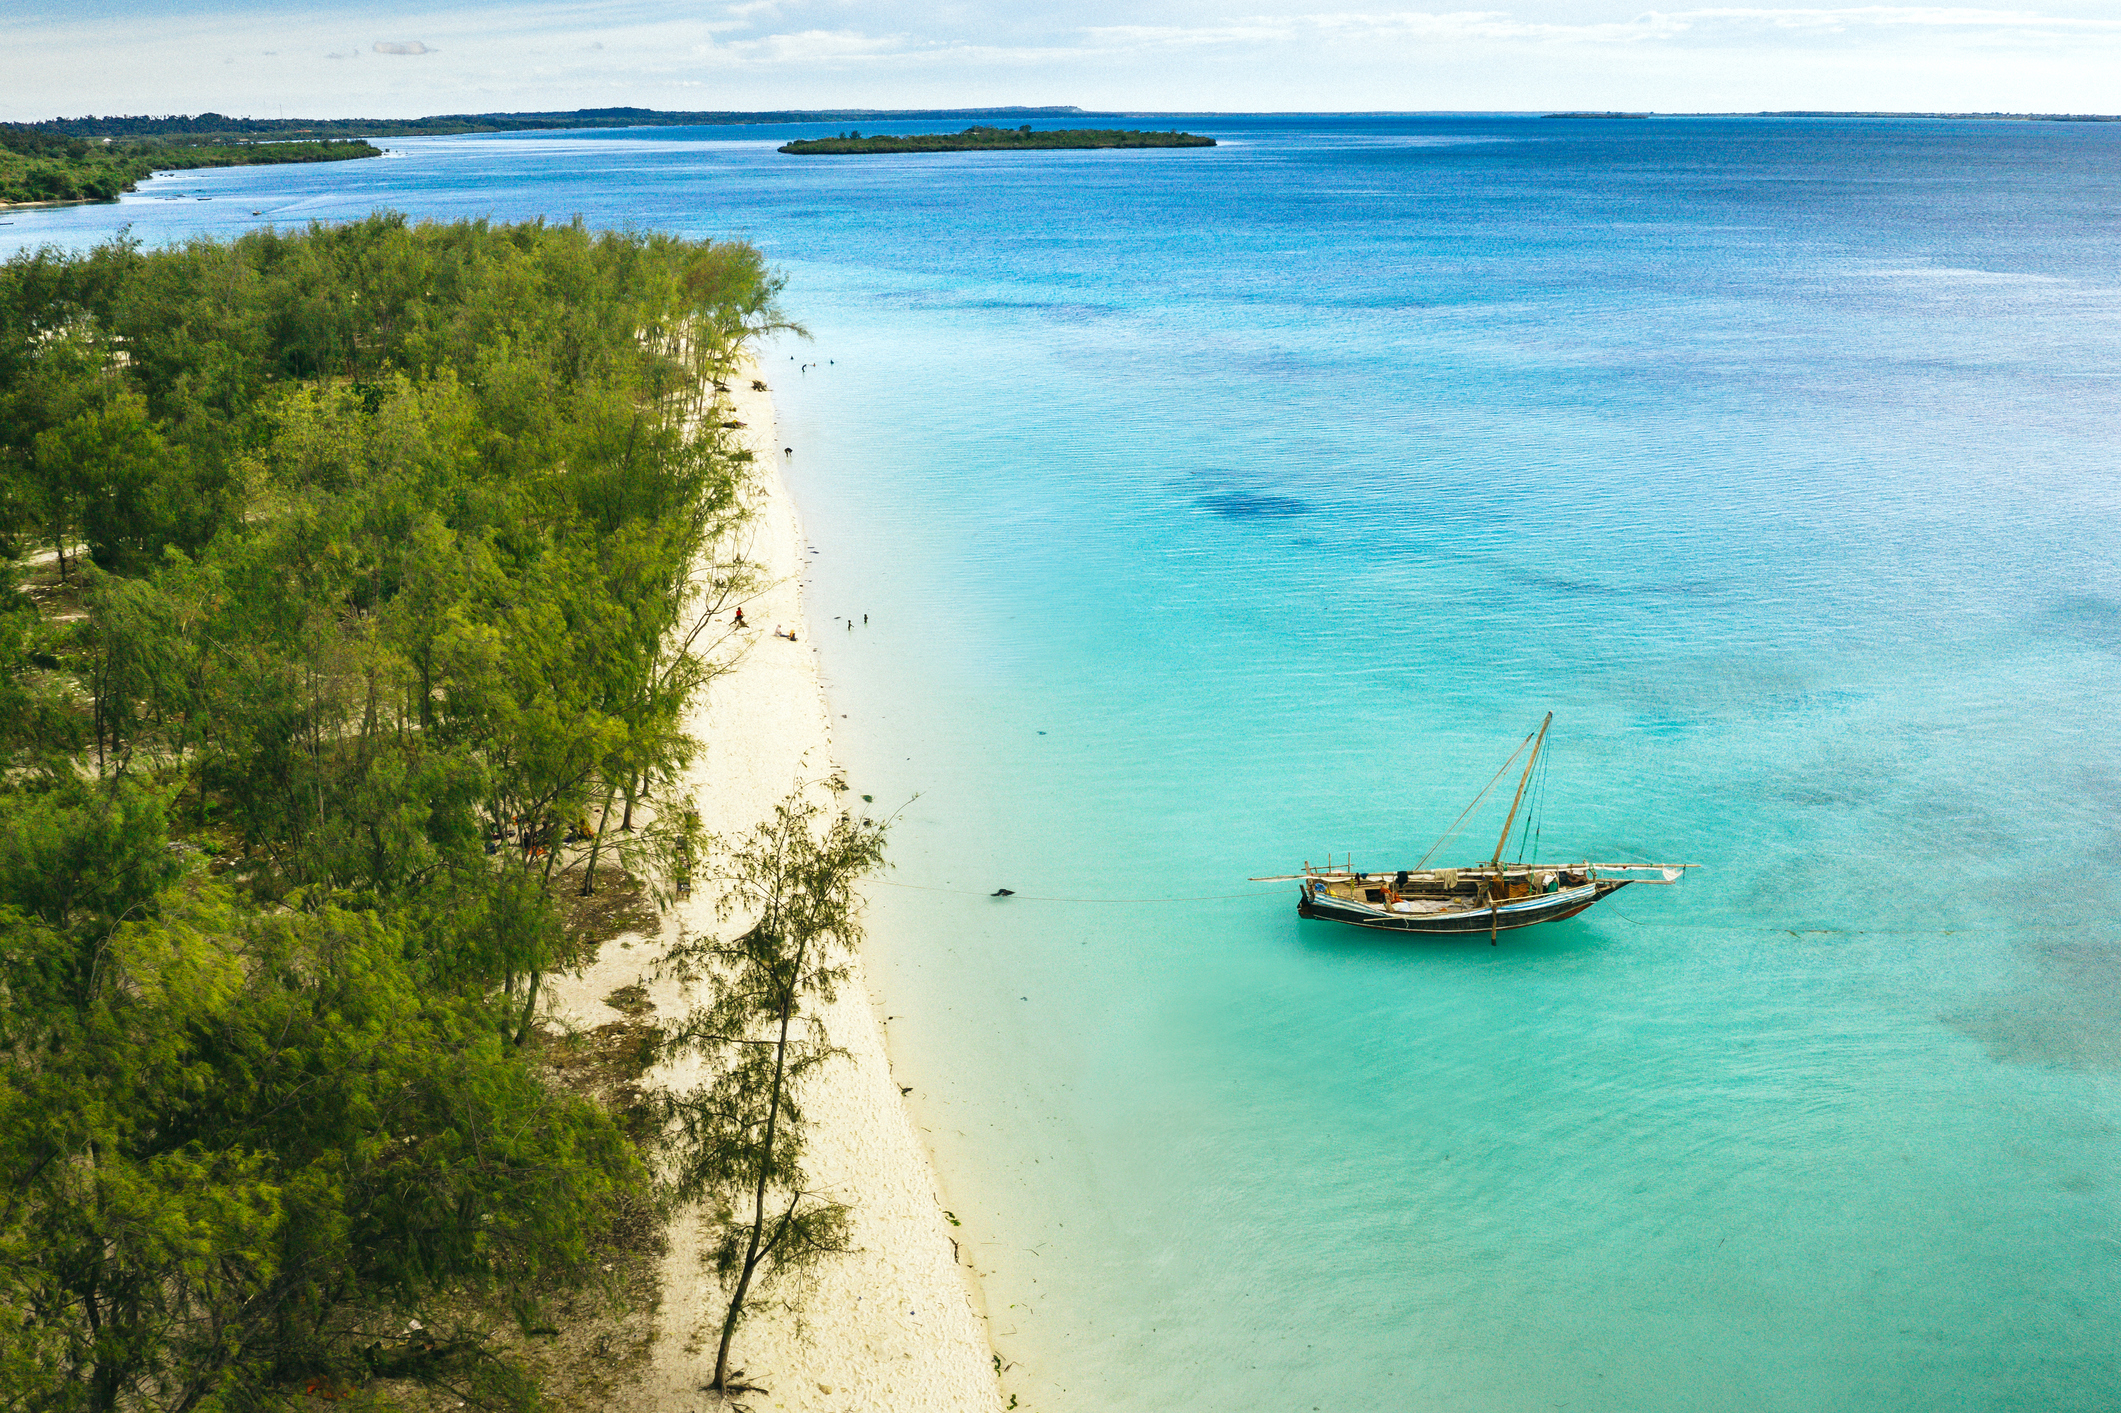 Zanzibar beach and coastline